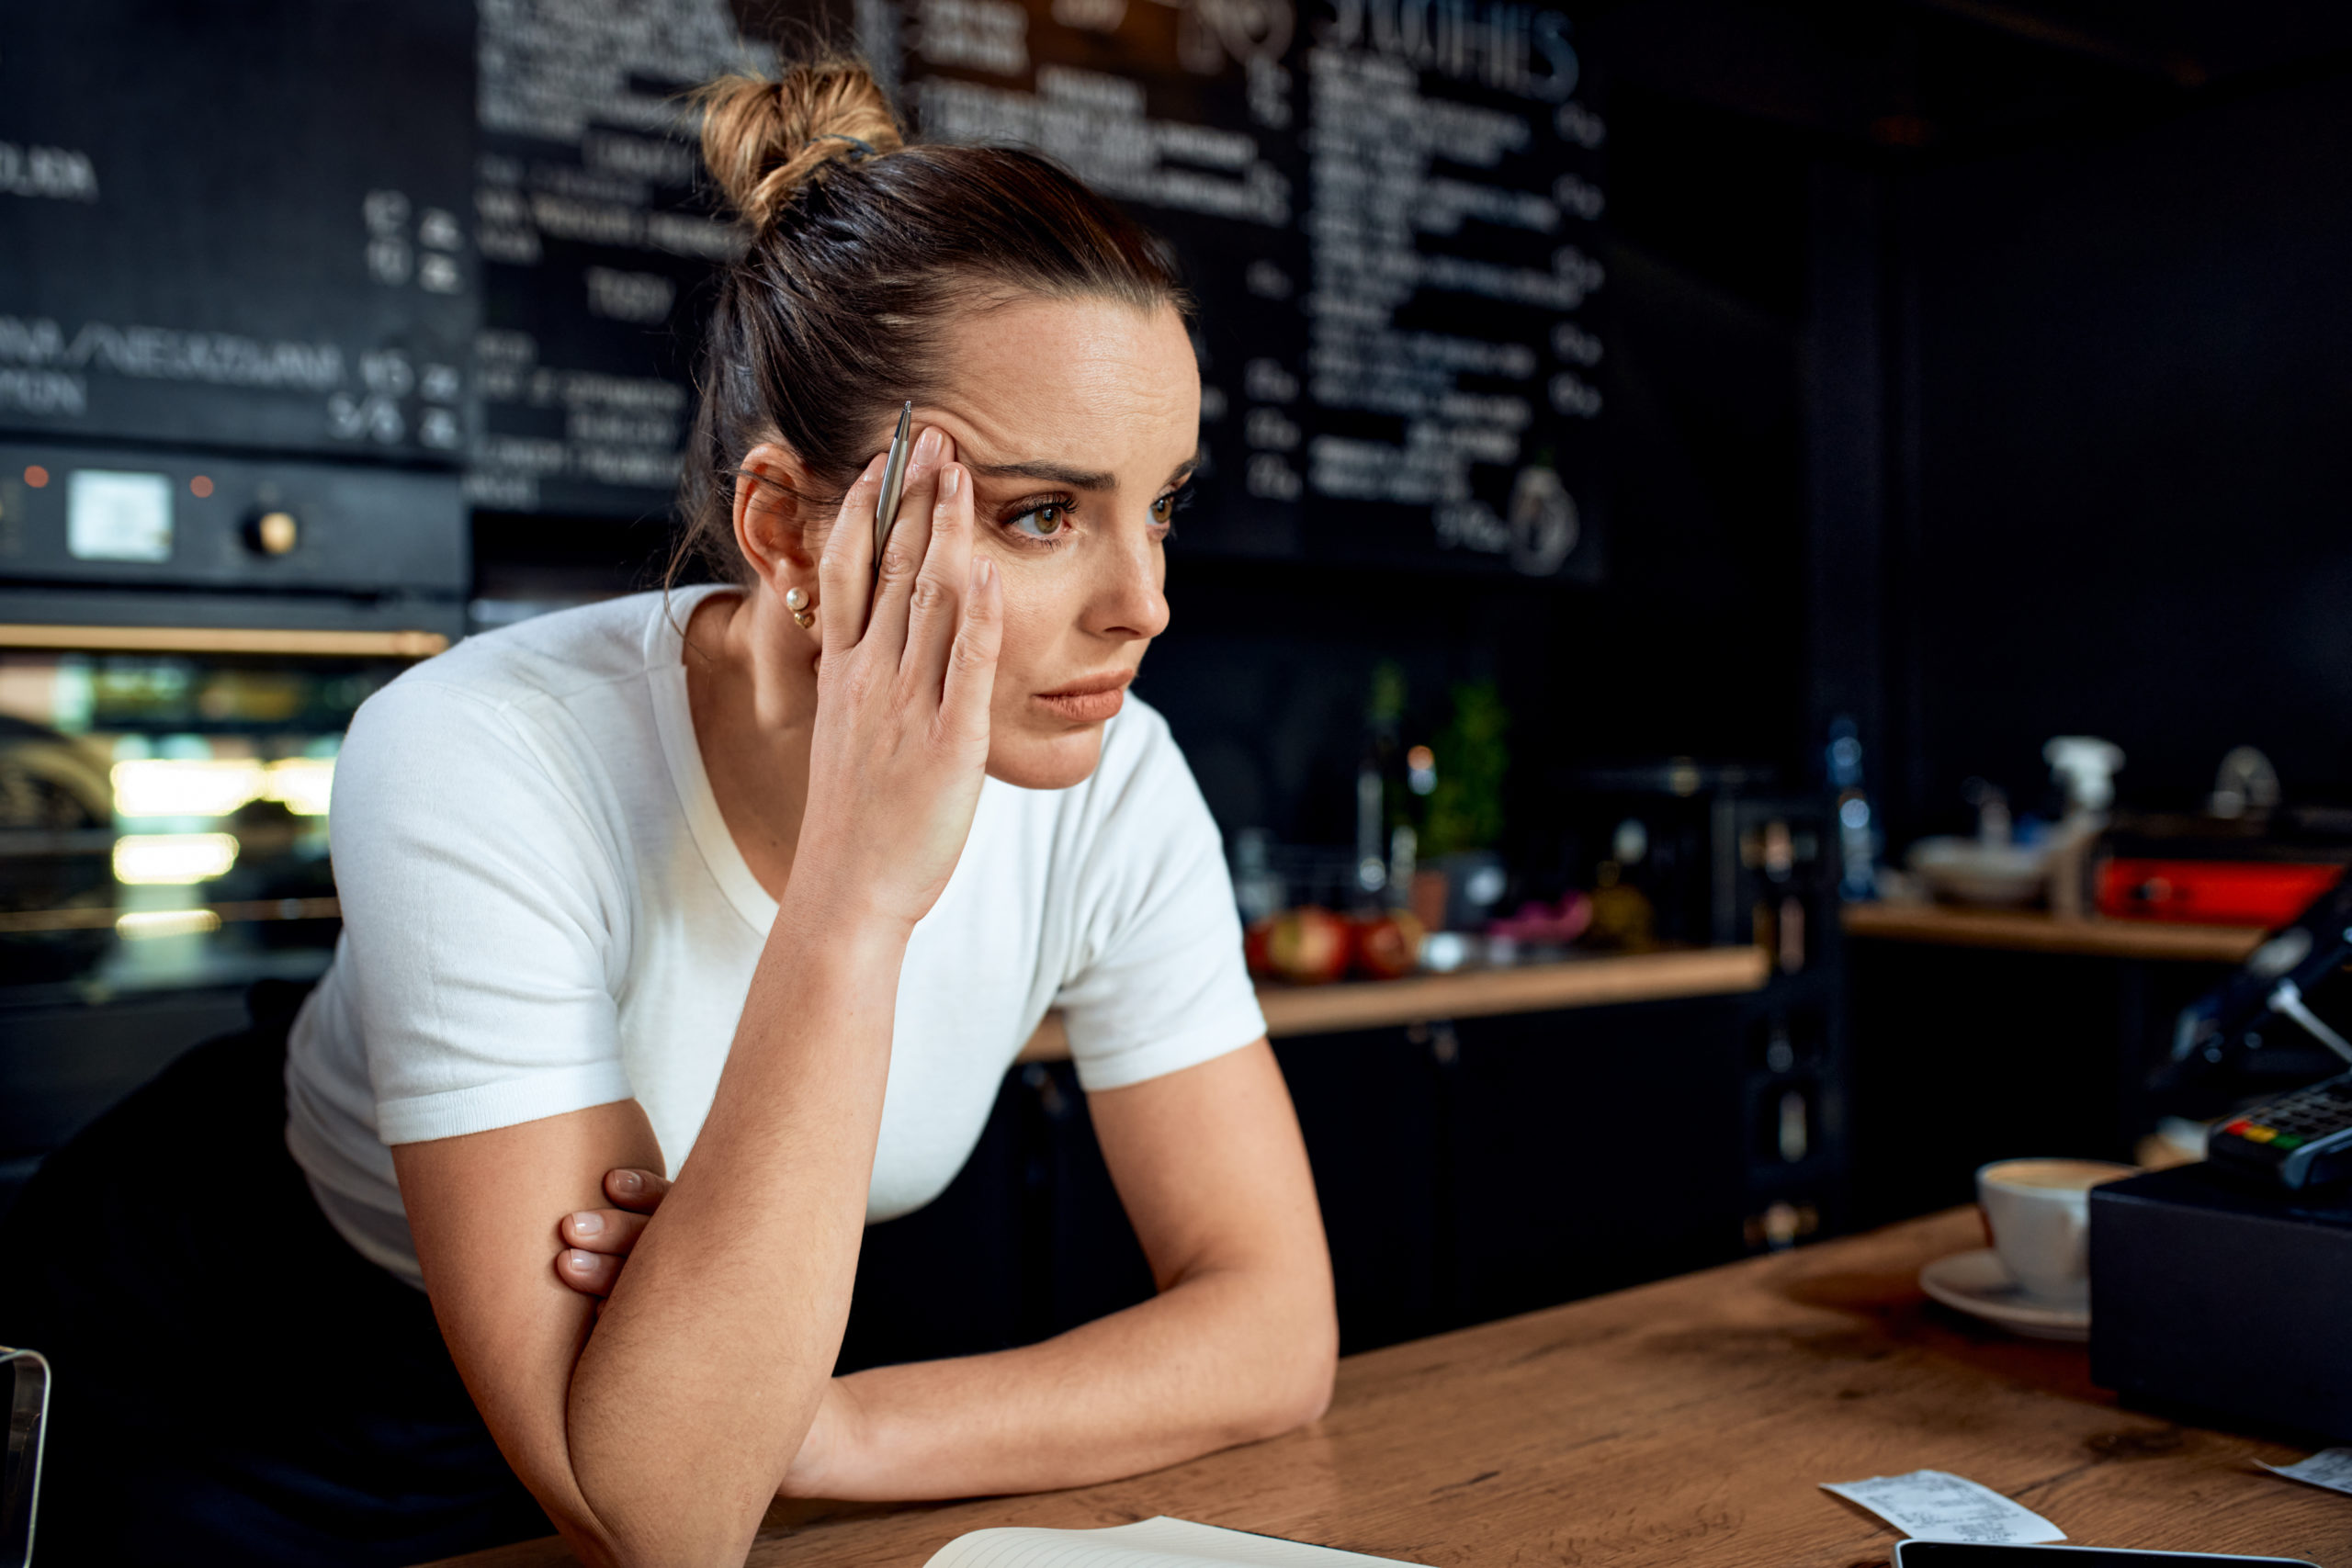 Unhappy restaurant worker symbolizing importance of employee retention